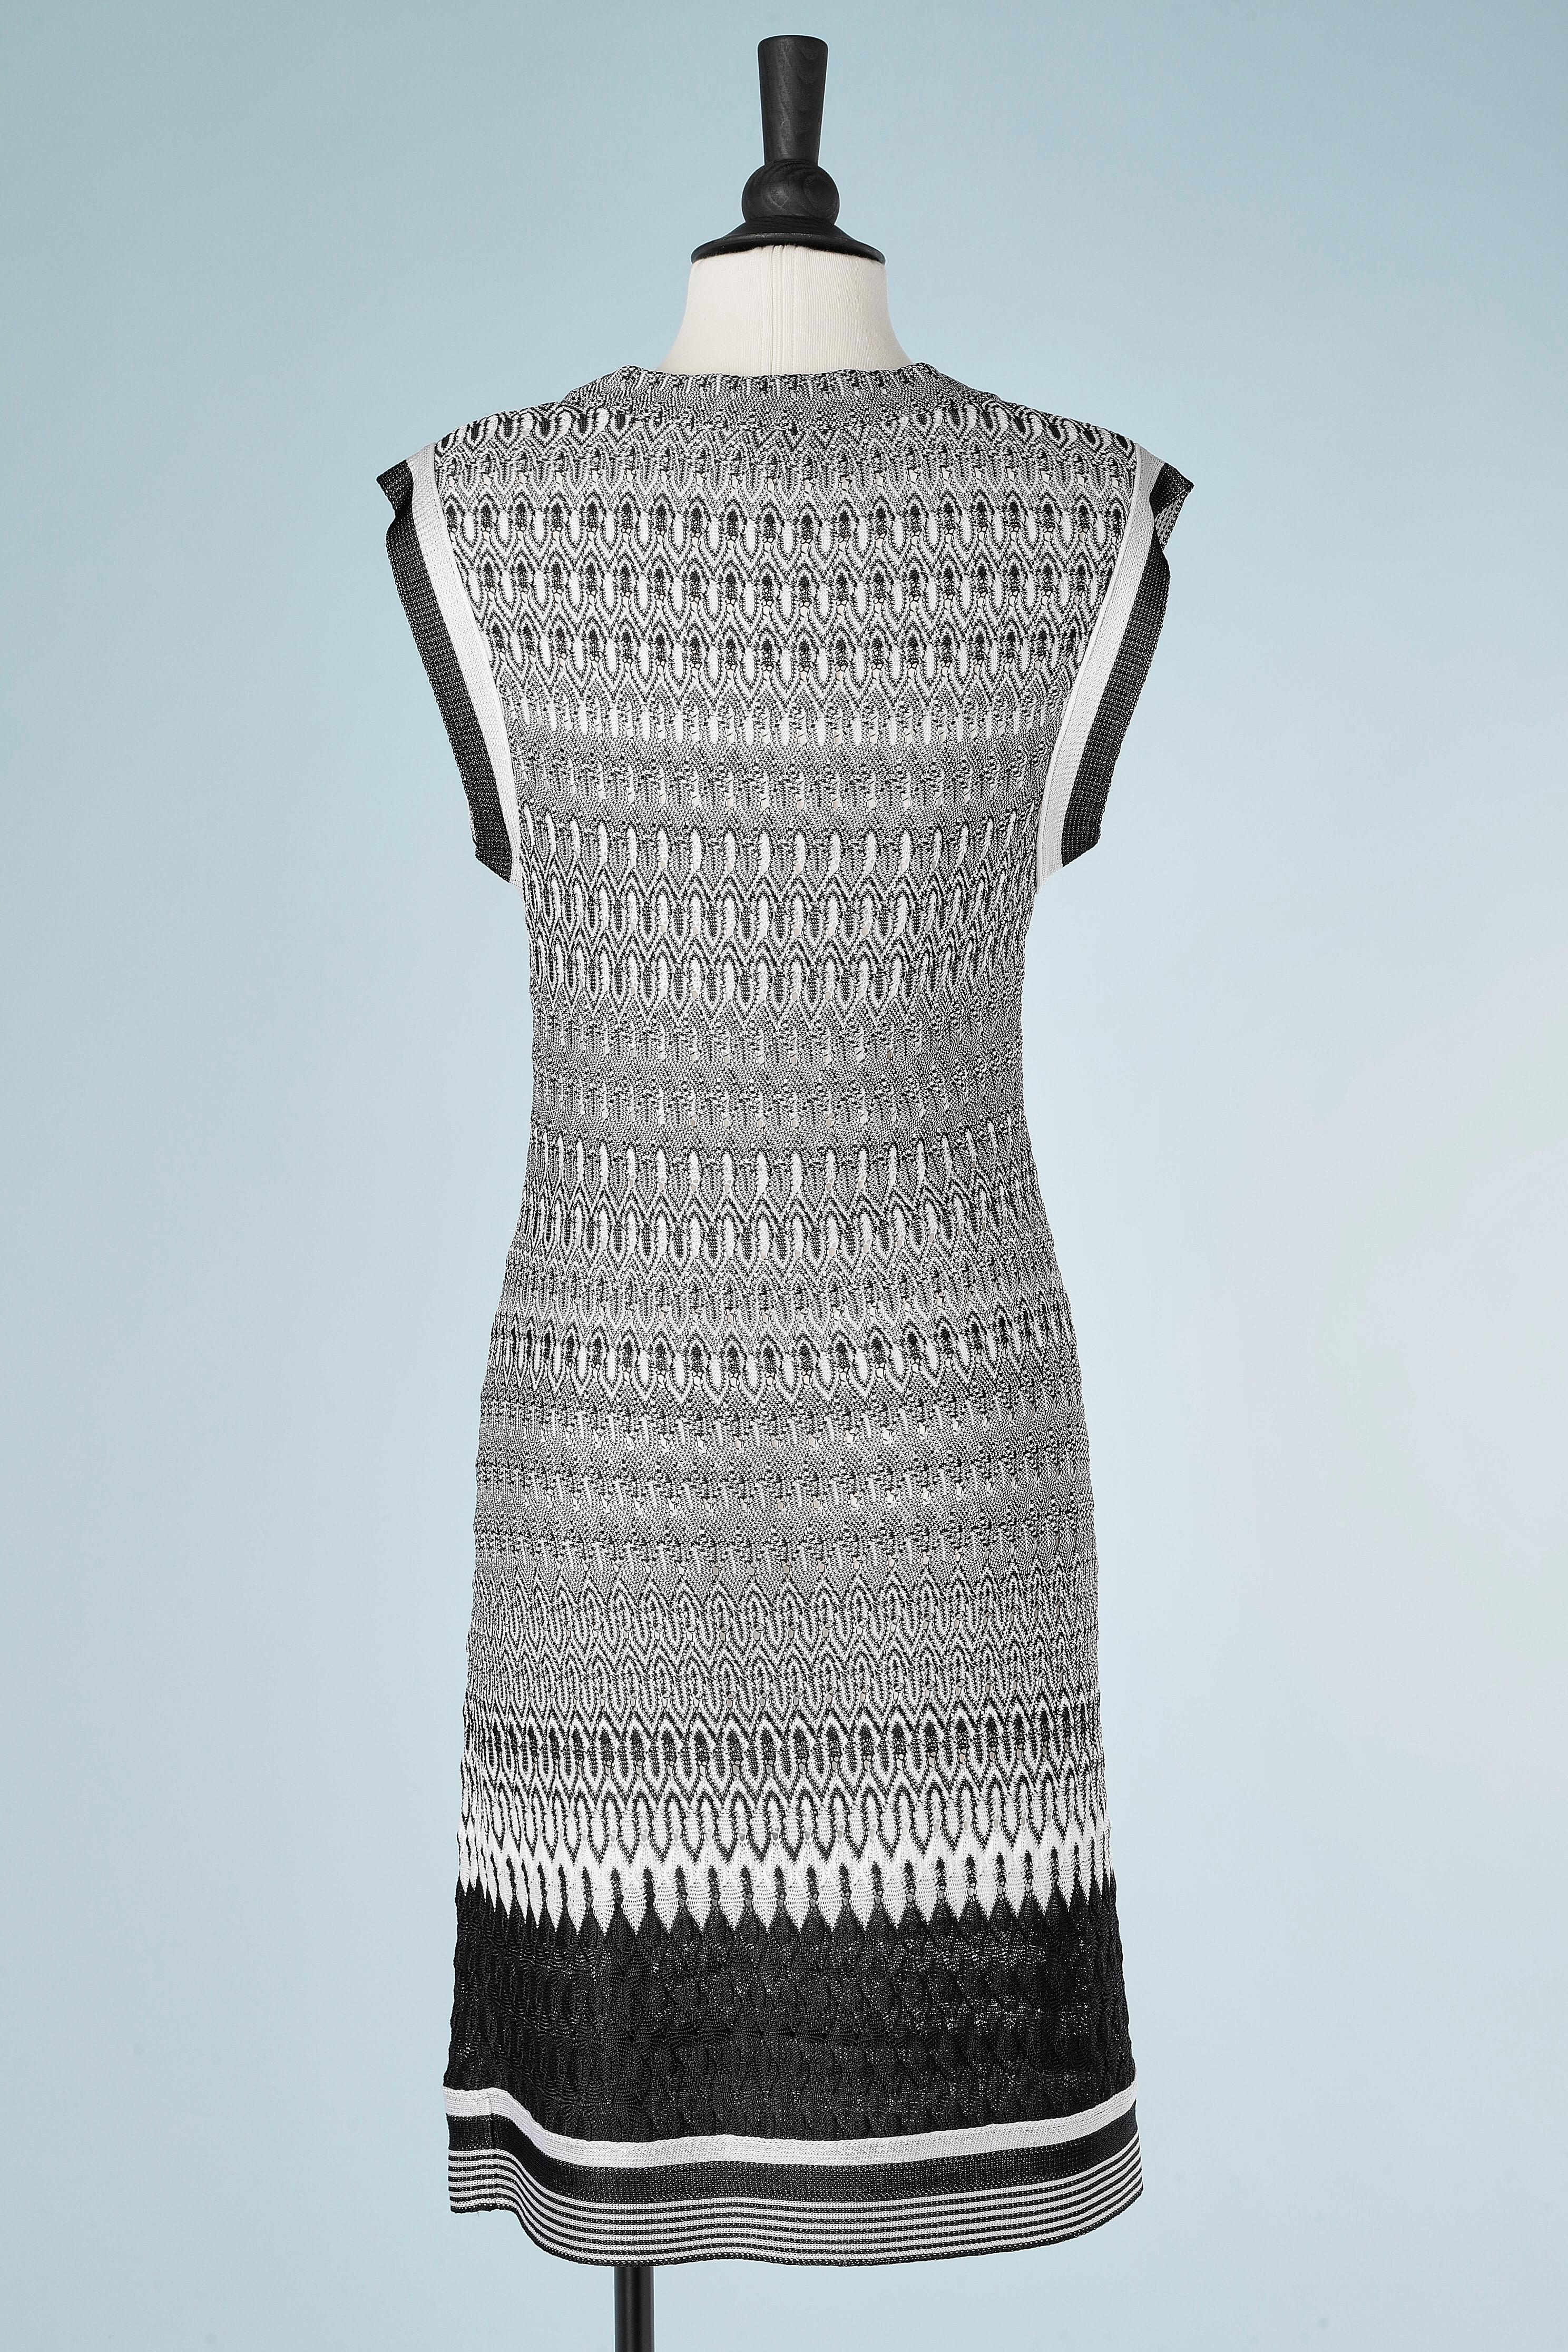 Black&white rayon jacquard knit sleeveless dress and cardigan ensemble Missoni  For Sale 6